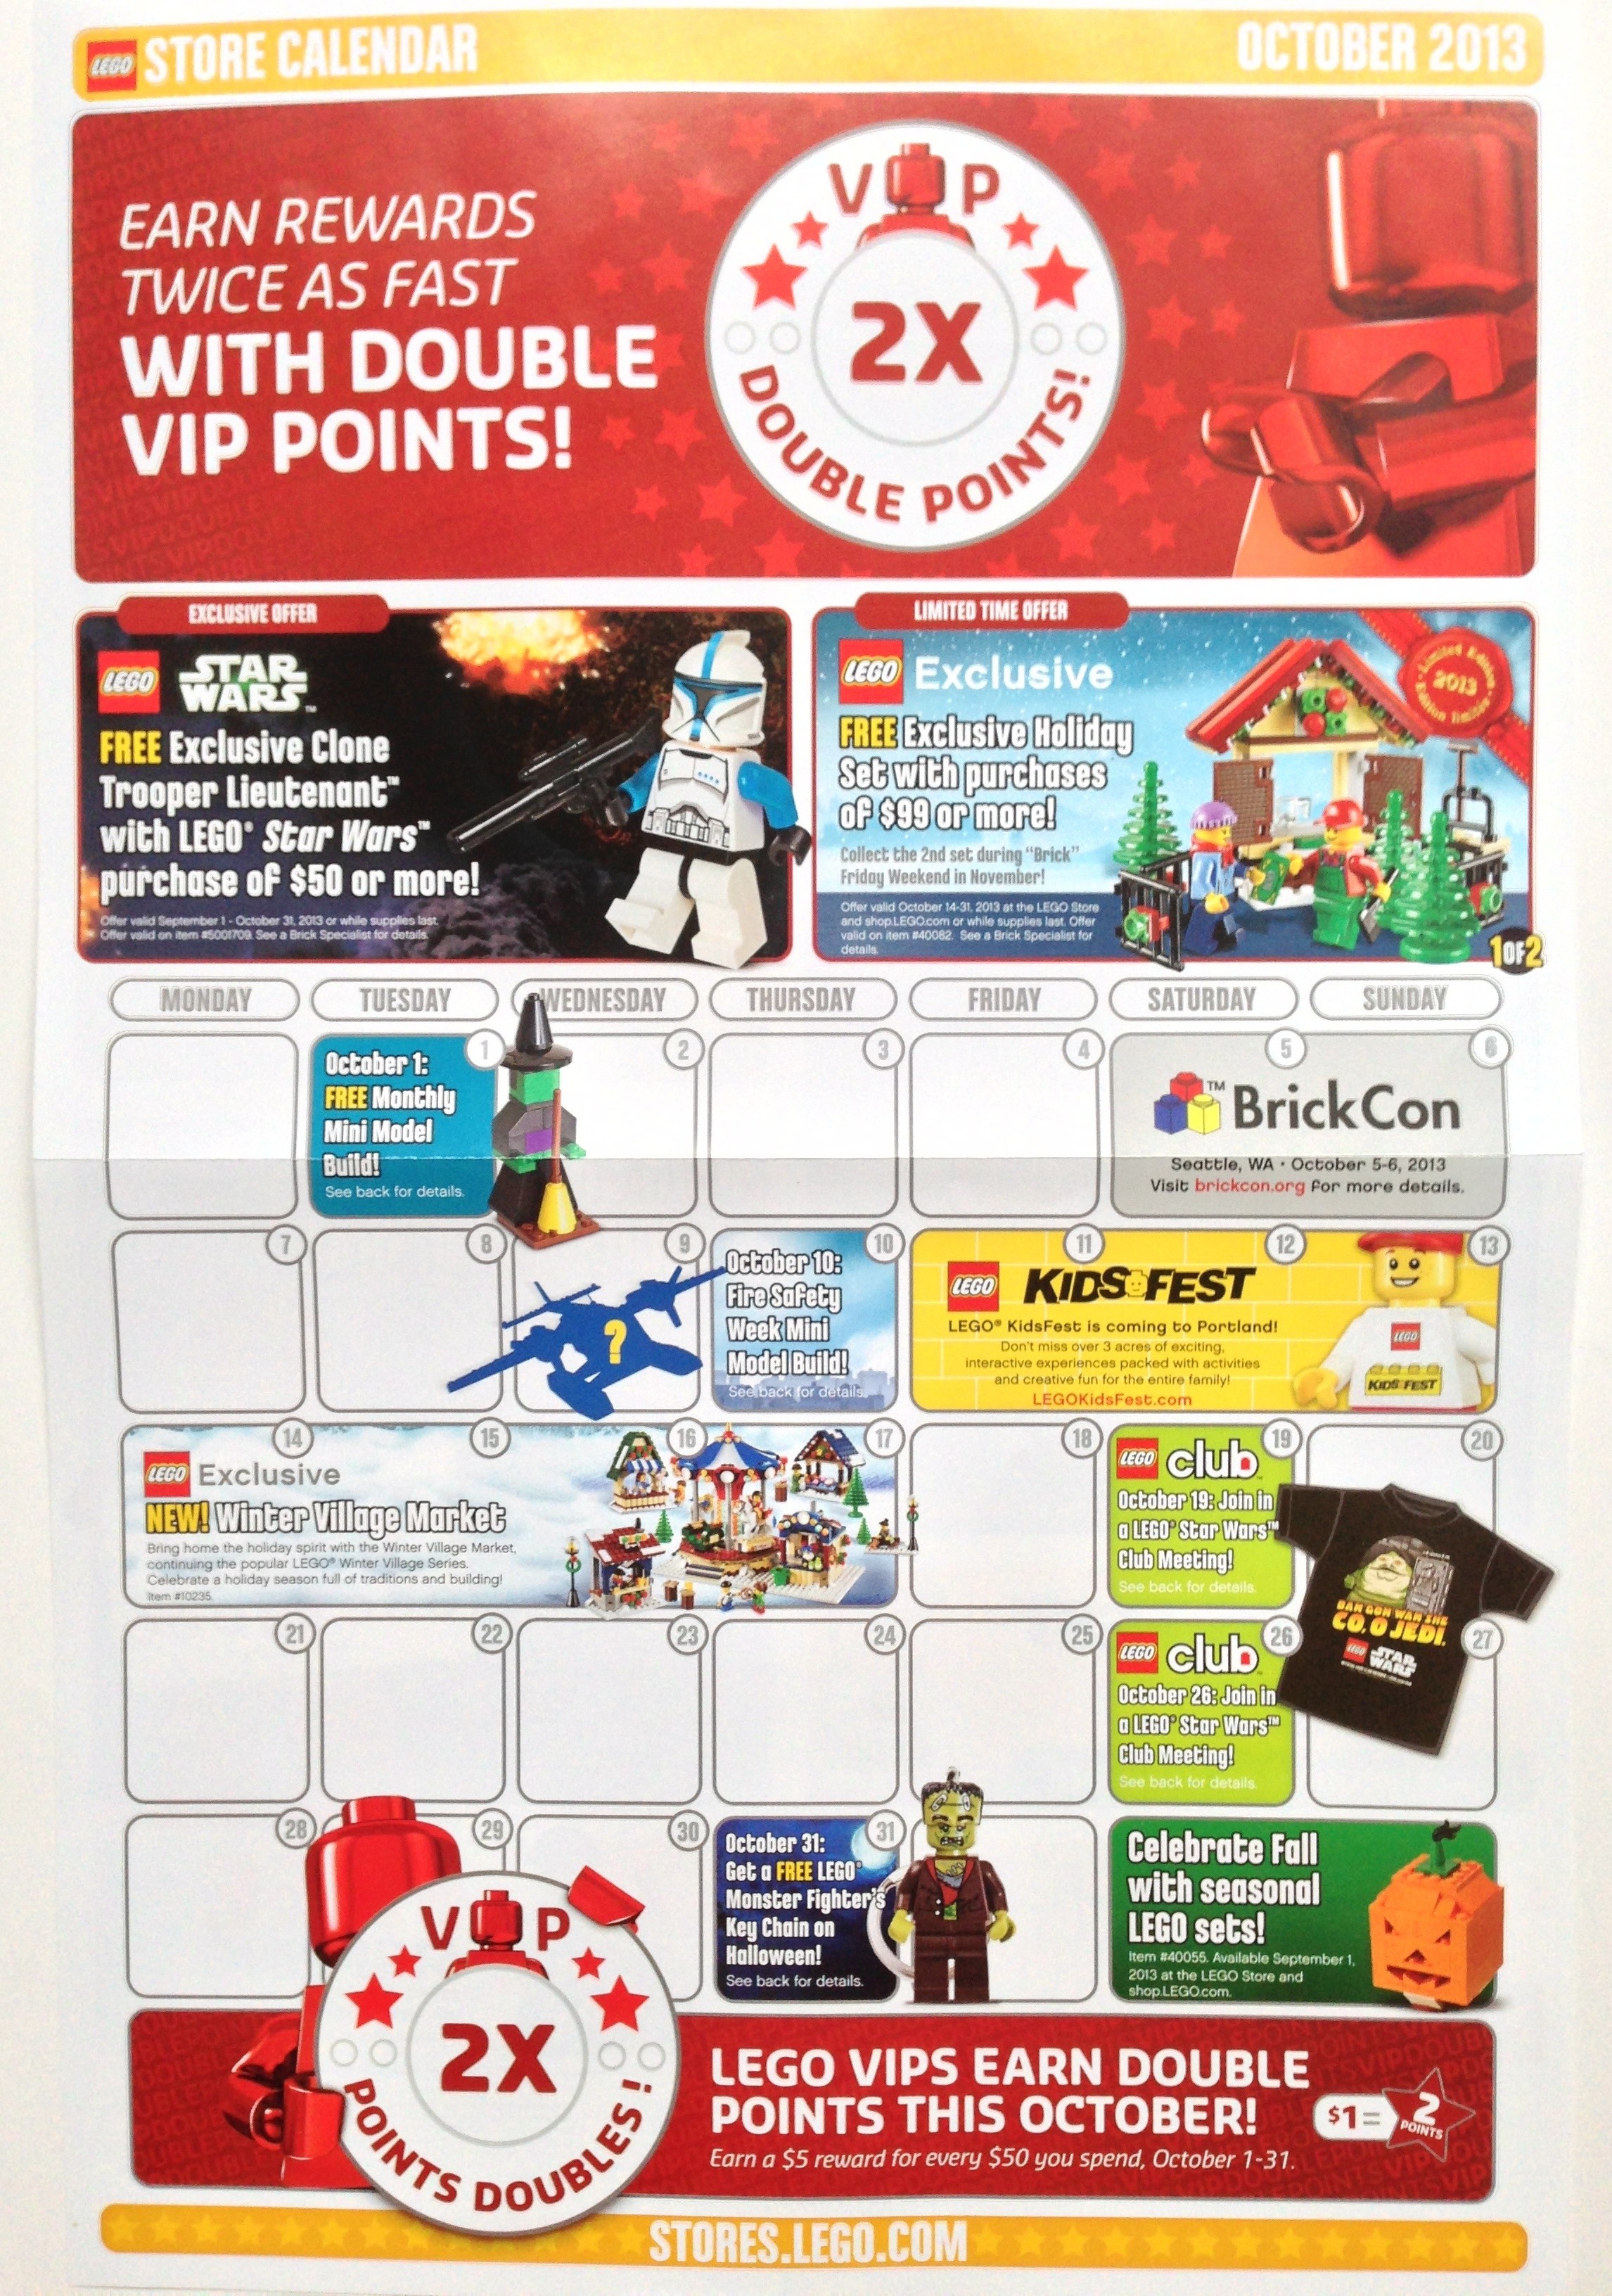 October LEGO Store Calendar Photos, Promos & Events! - Bricks and Bloks